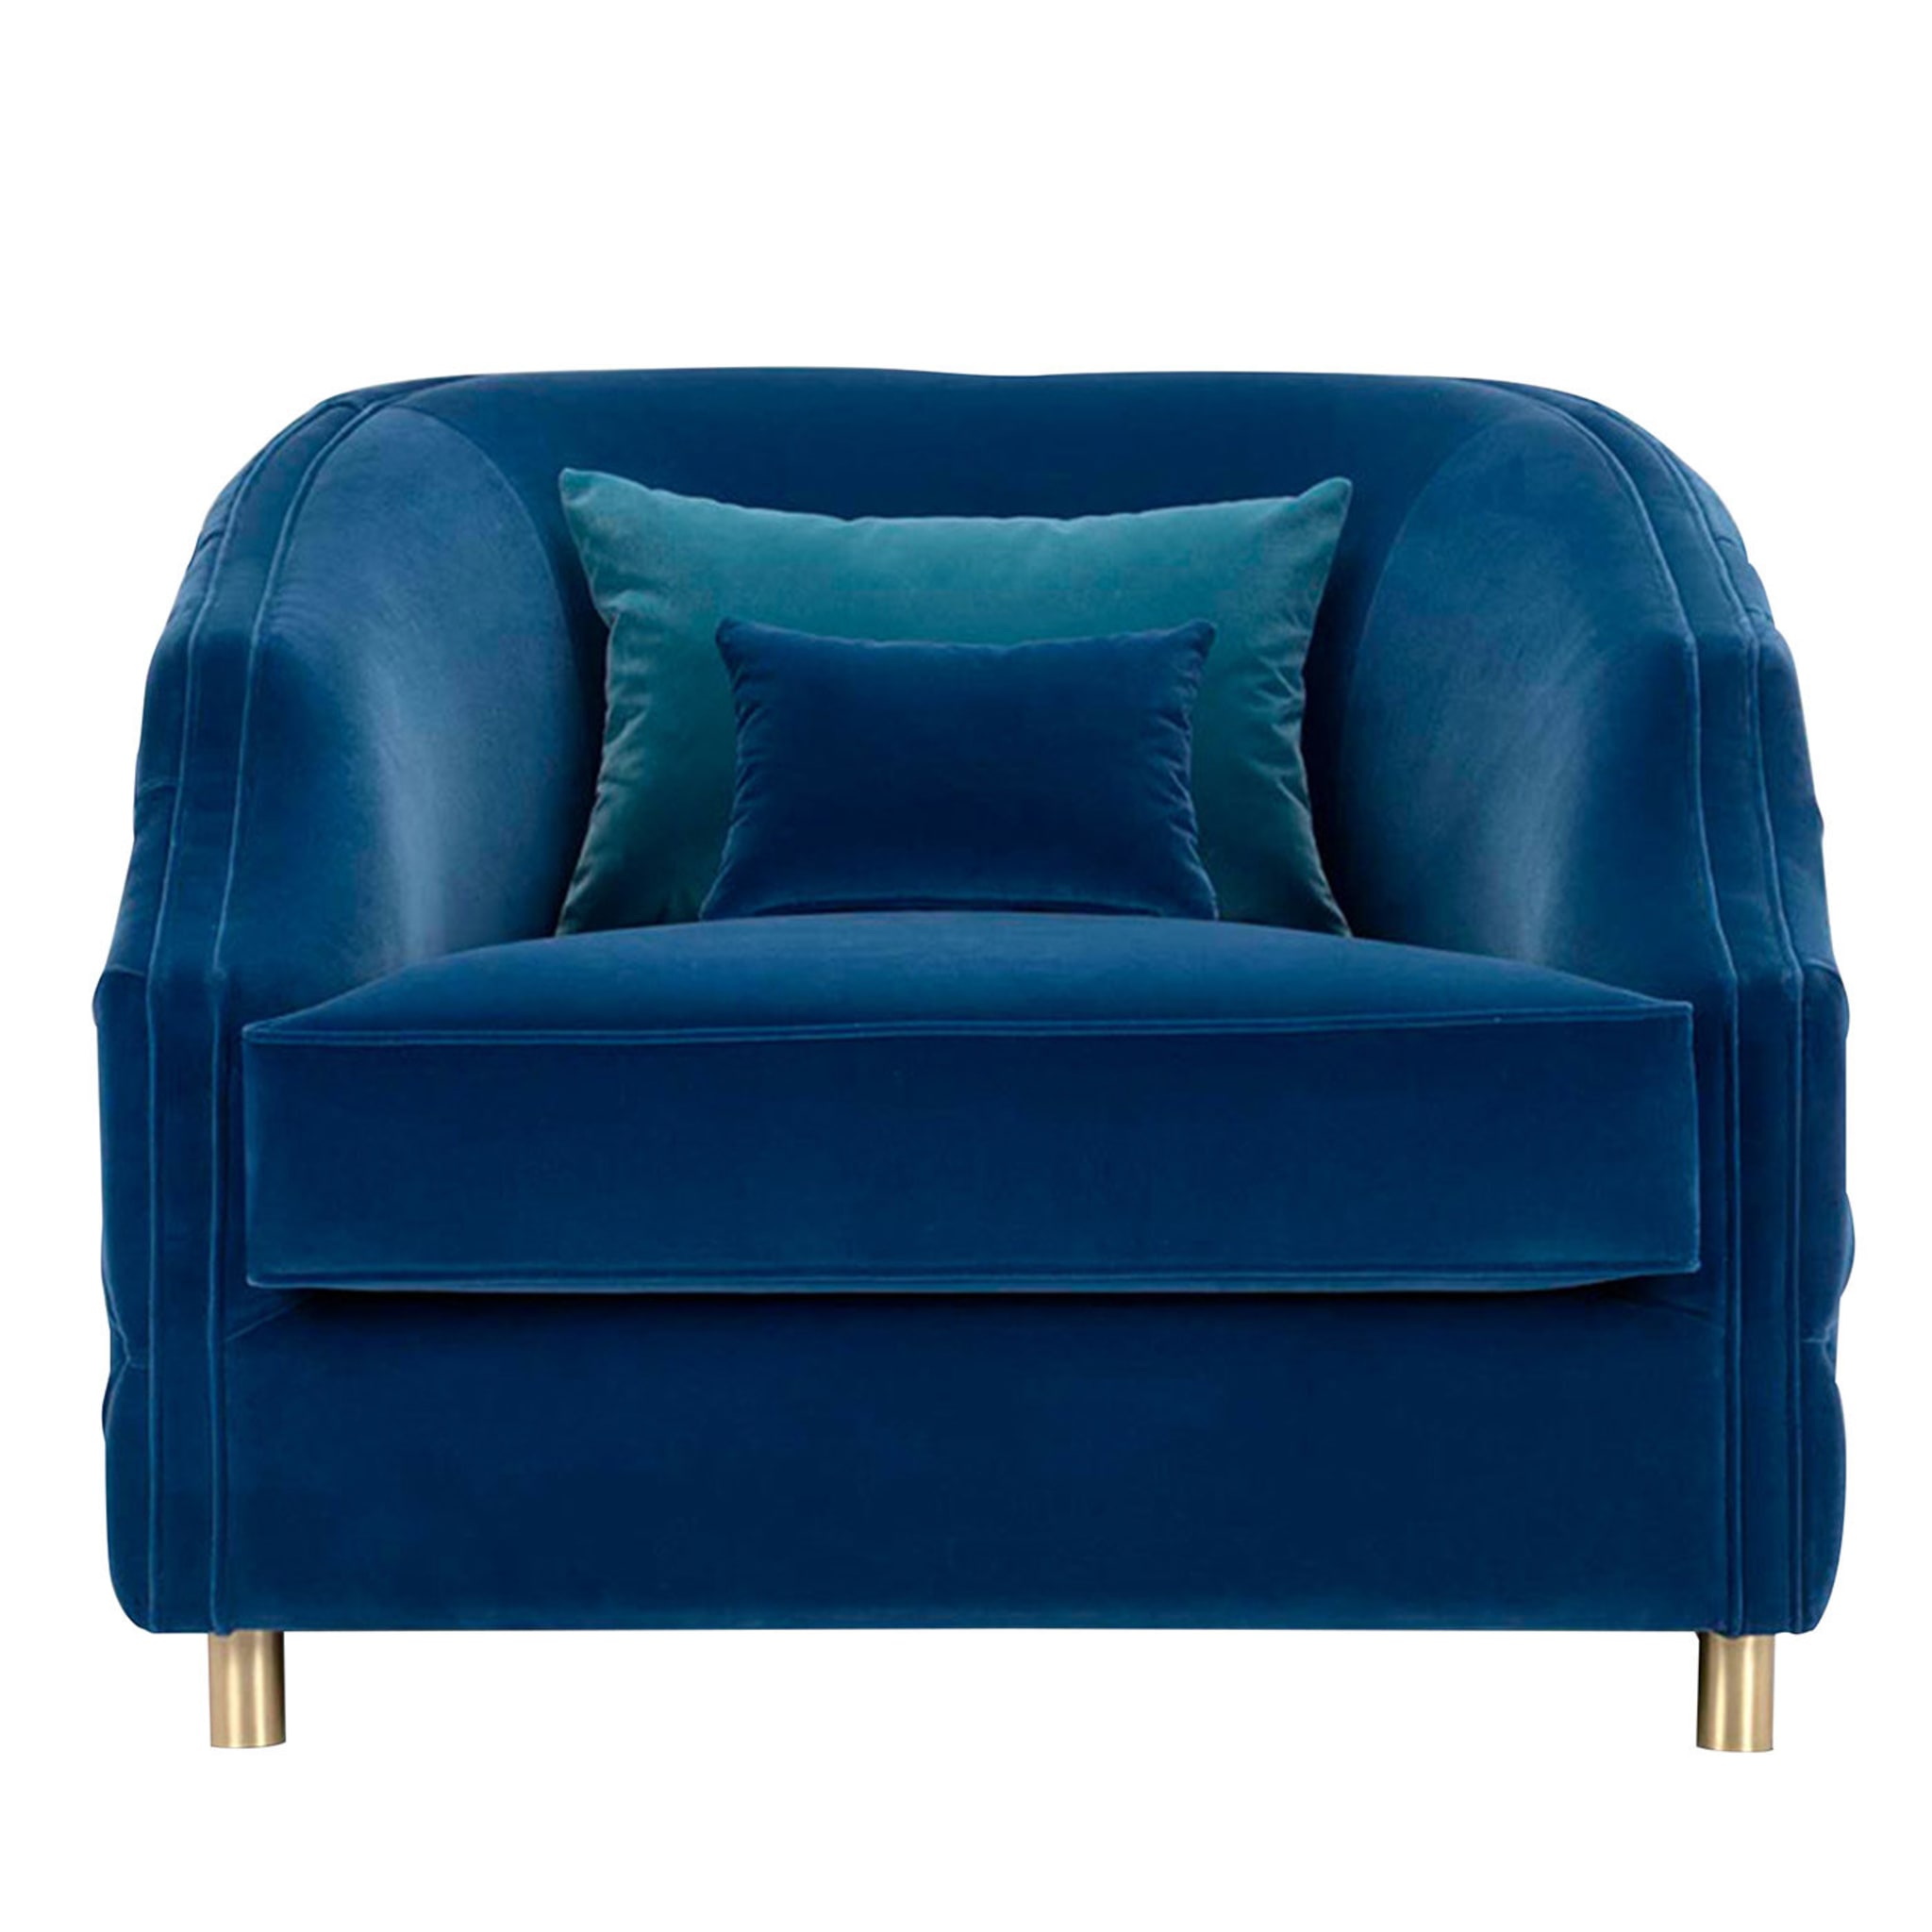 Cleio Large Blue Armchair - Main view